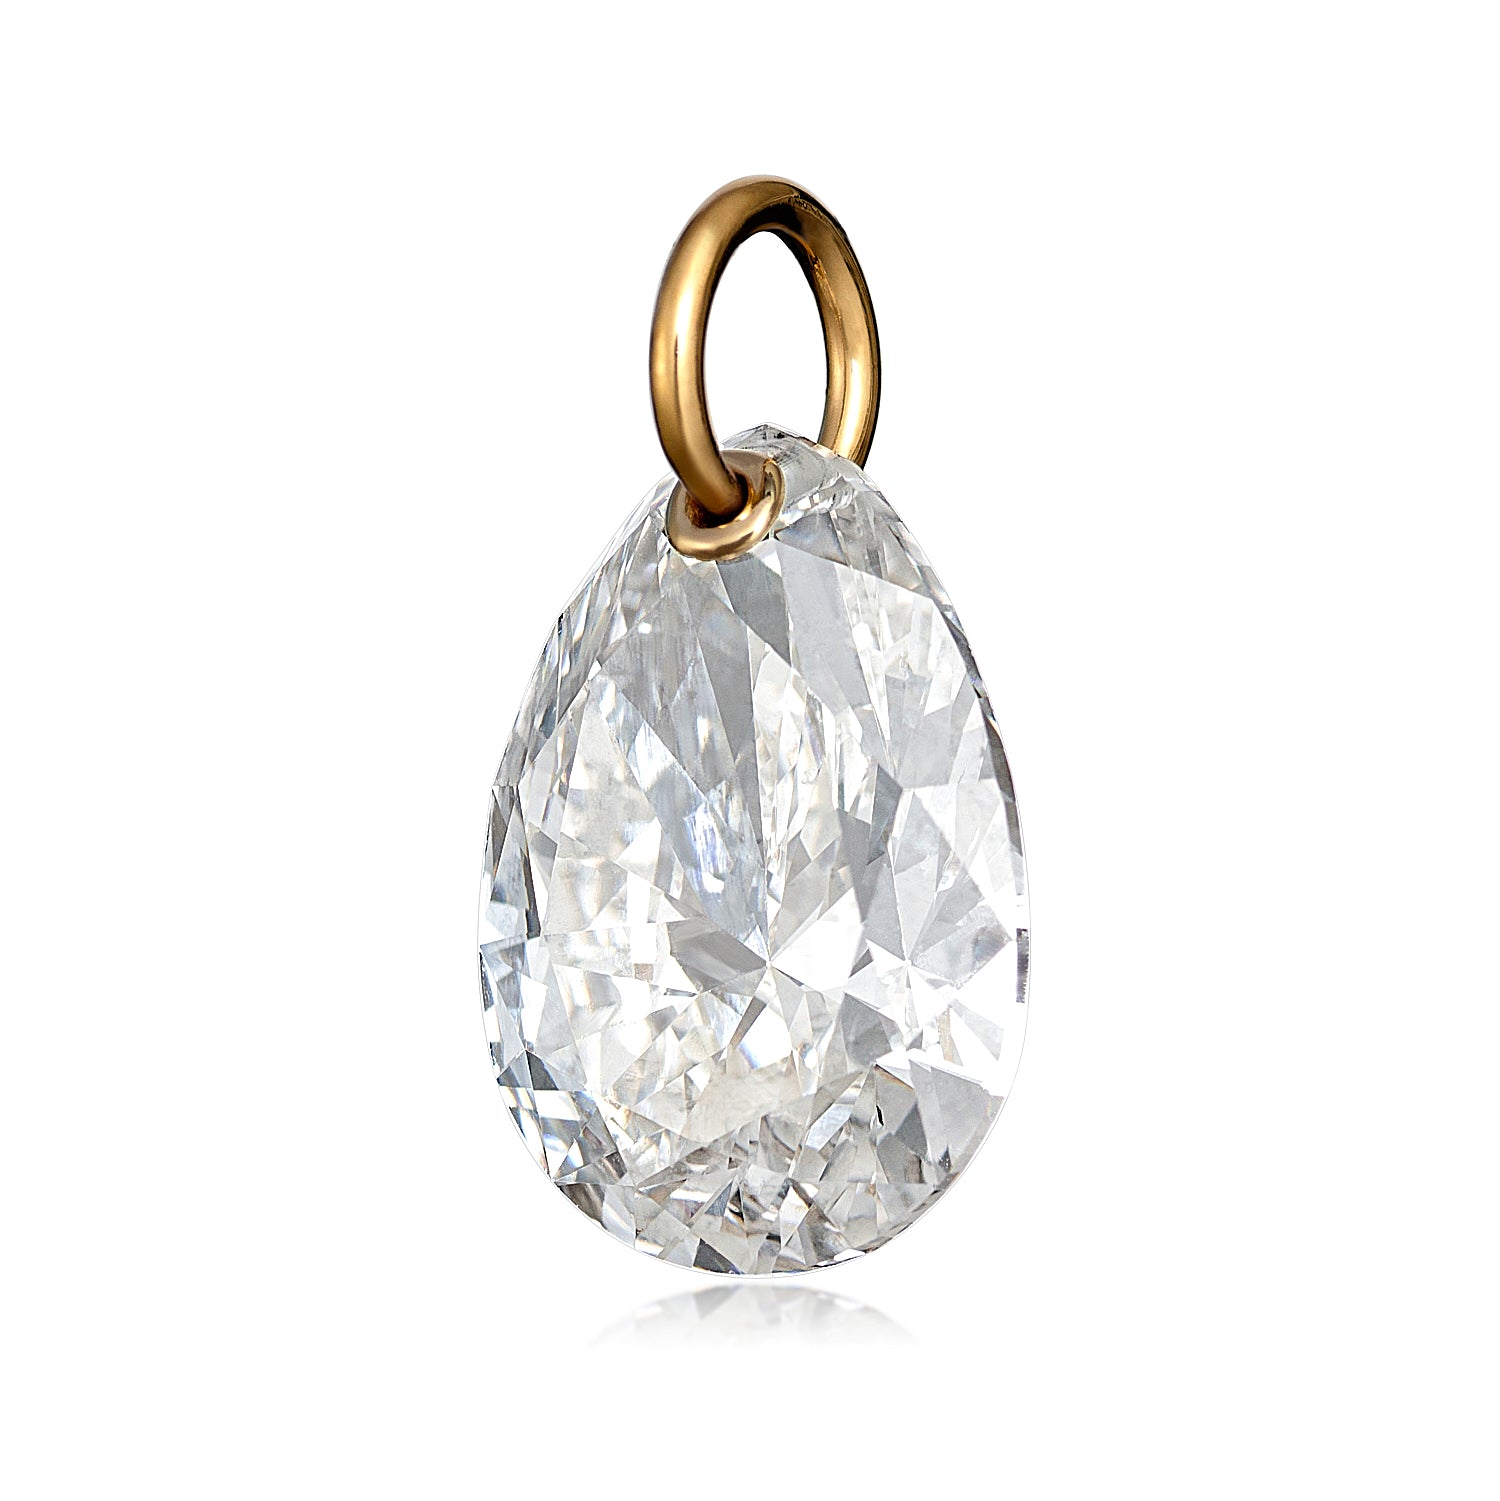 The Punch Diamond Pear Pendant